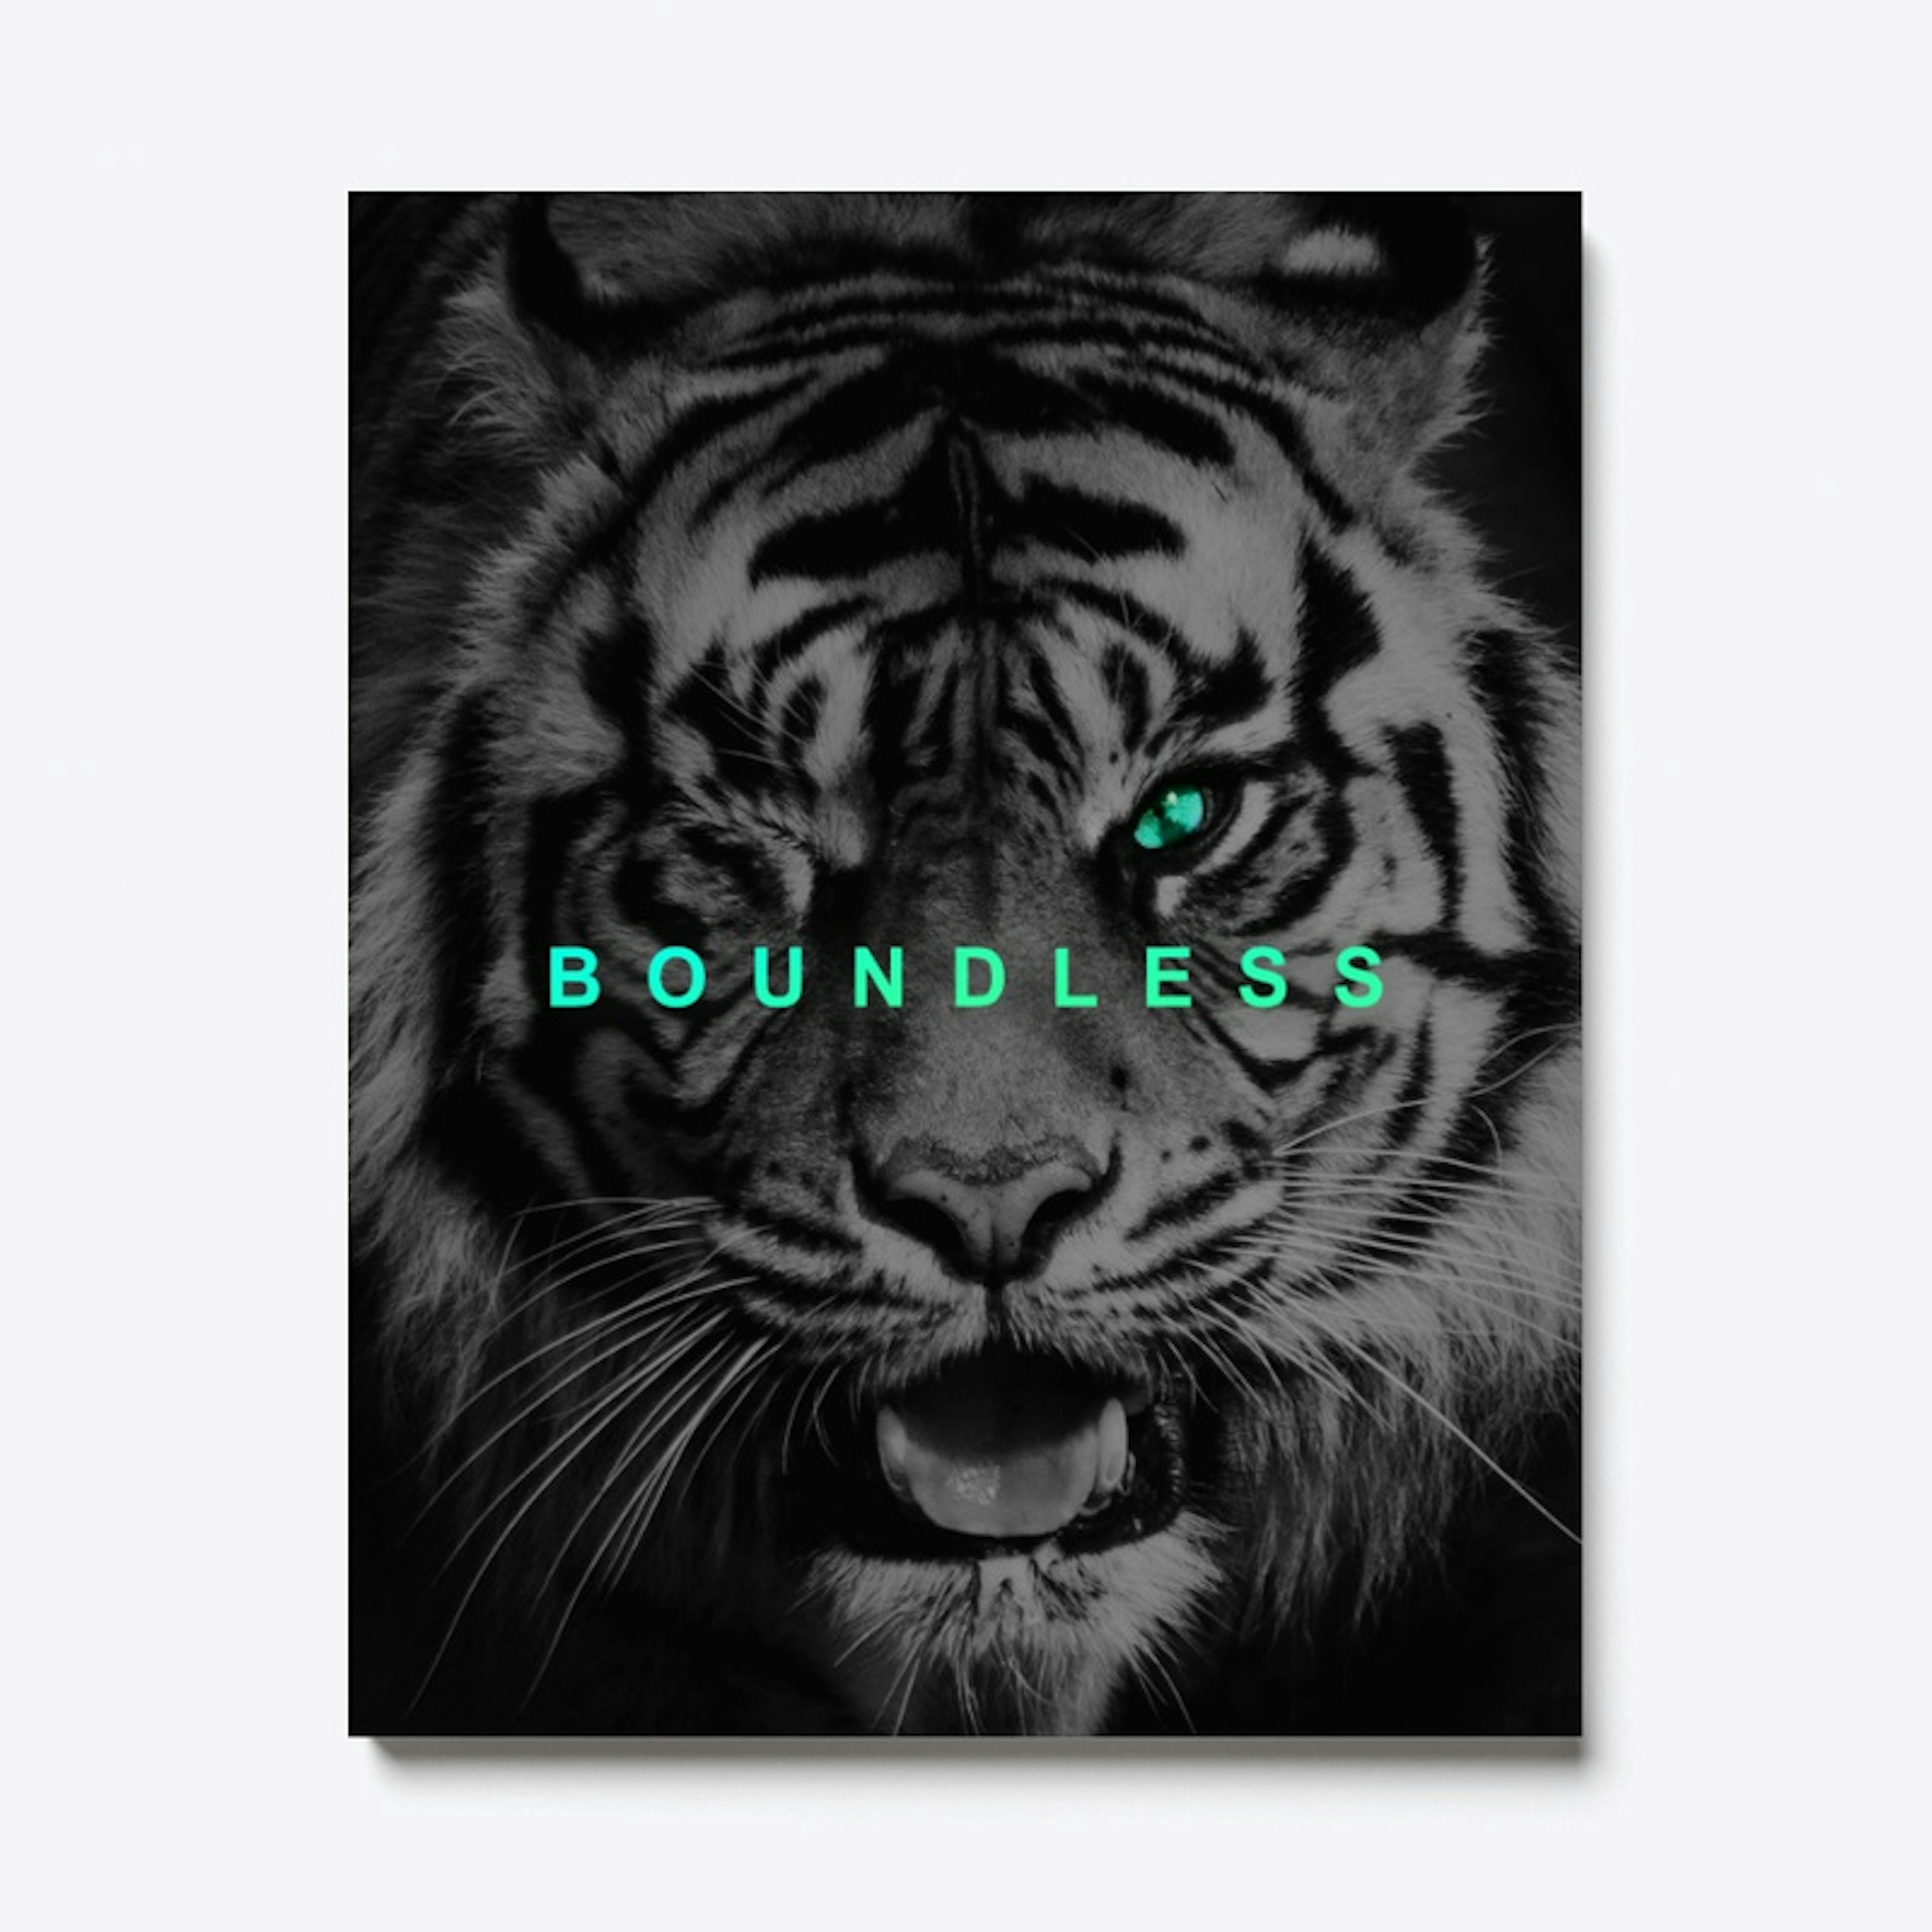 I am boundless - Motivational Poster